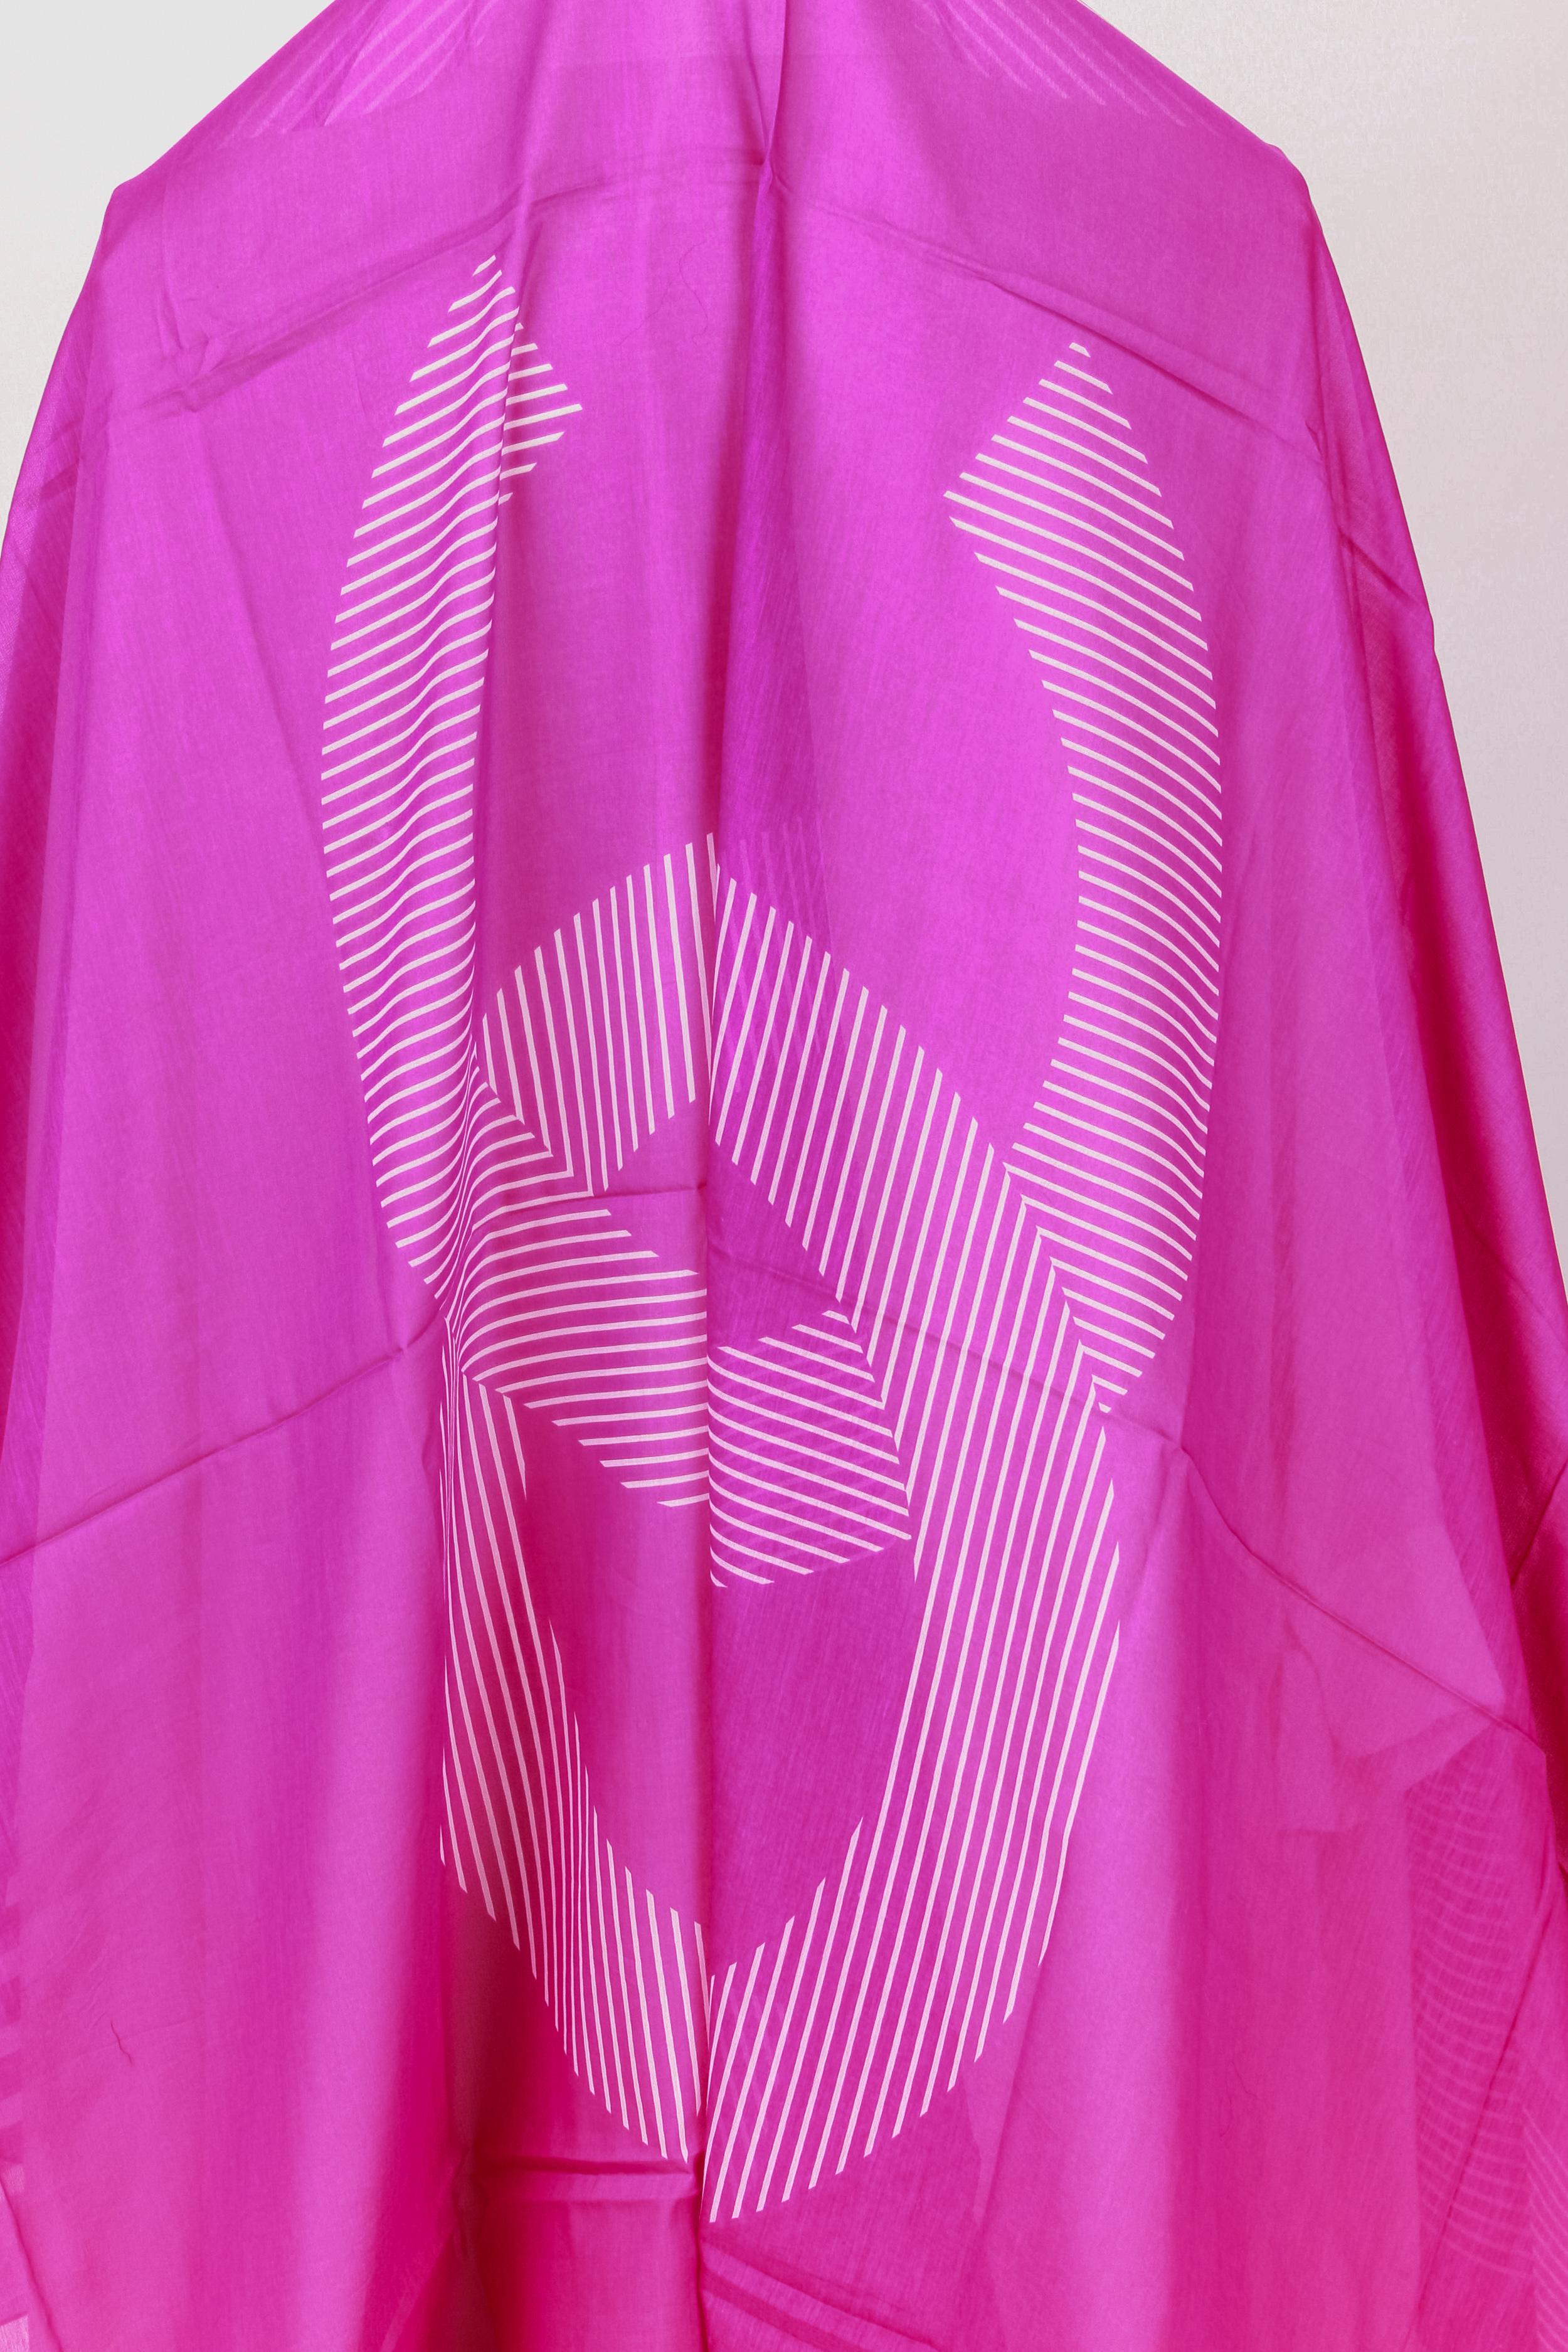 Chanel new fuchsia and white striped design sarong , 80% cotton, 20% silk, 78